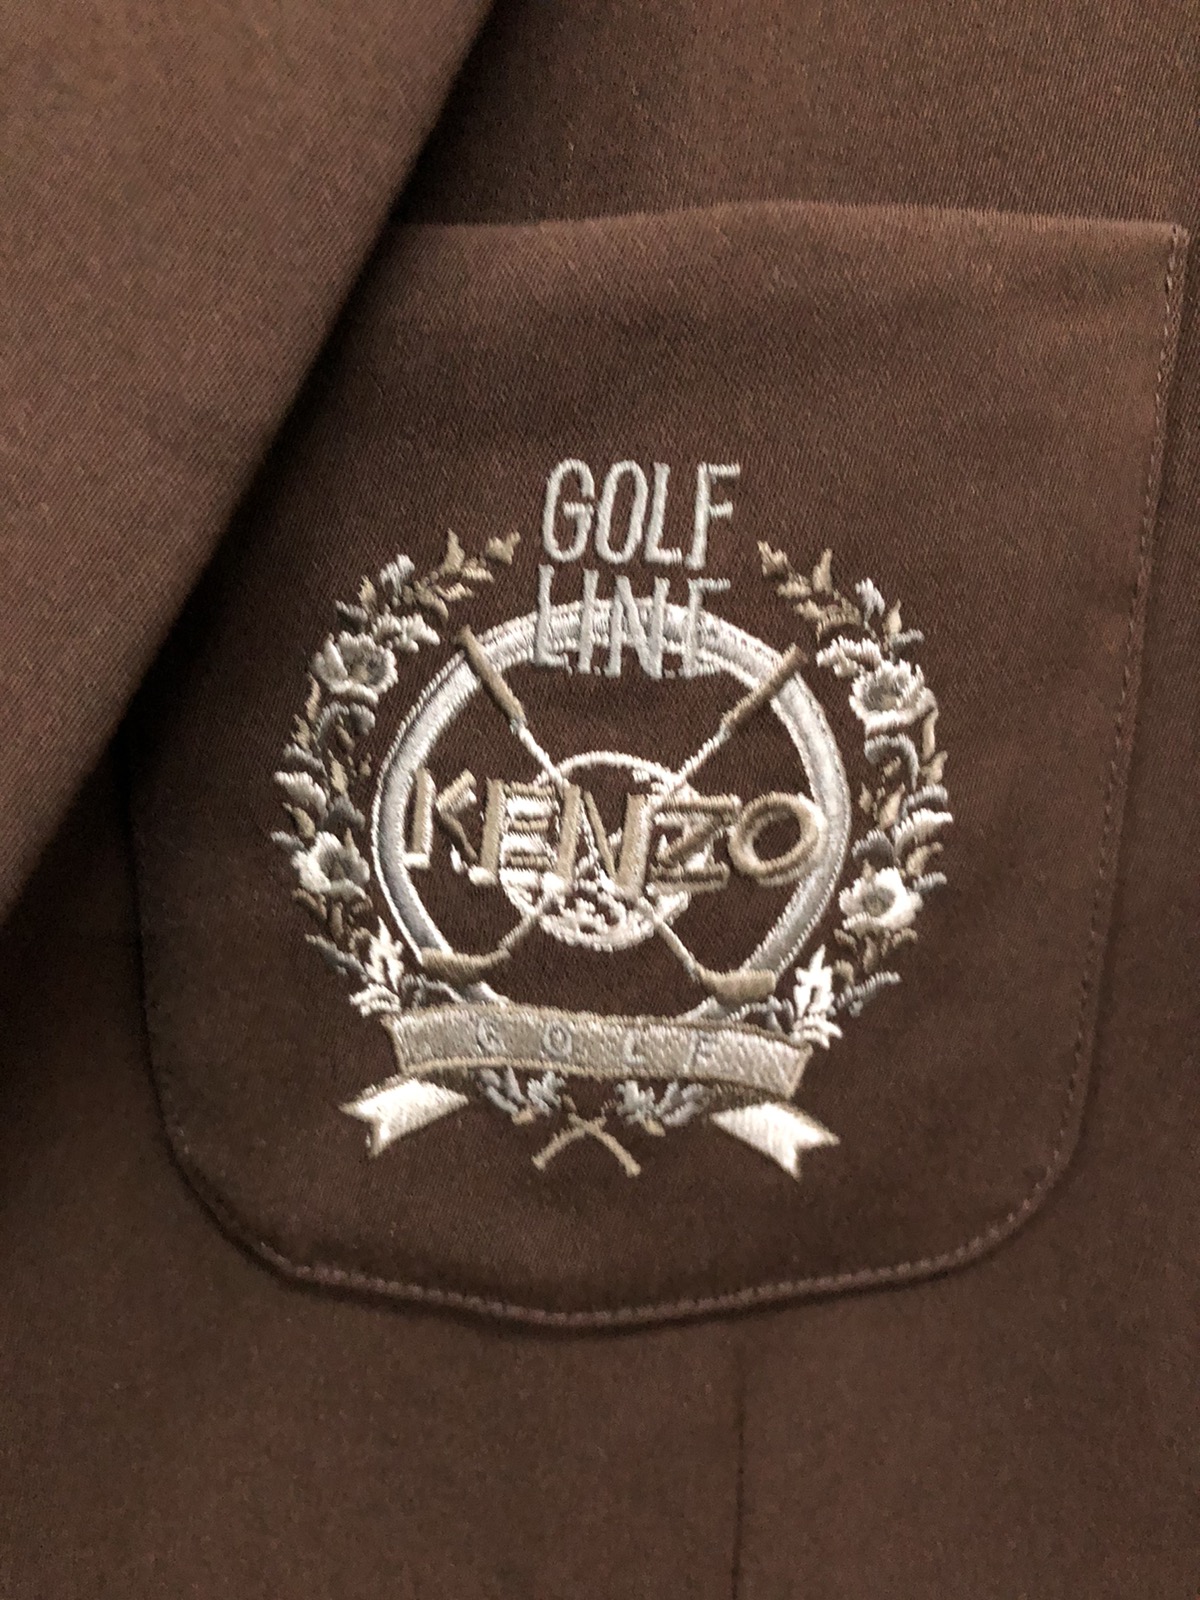 🔥FAST SALE🔥Kenzo Golf Blazer Coat Nice Design - 8